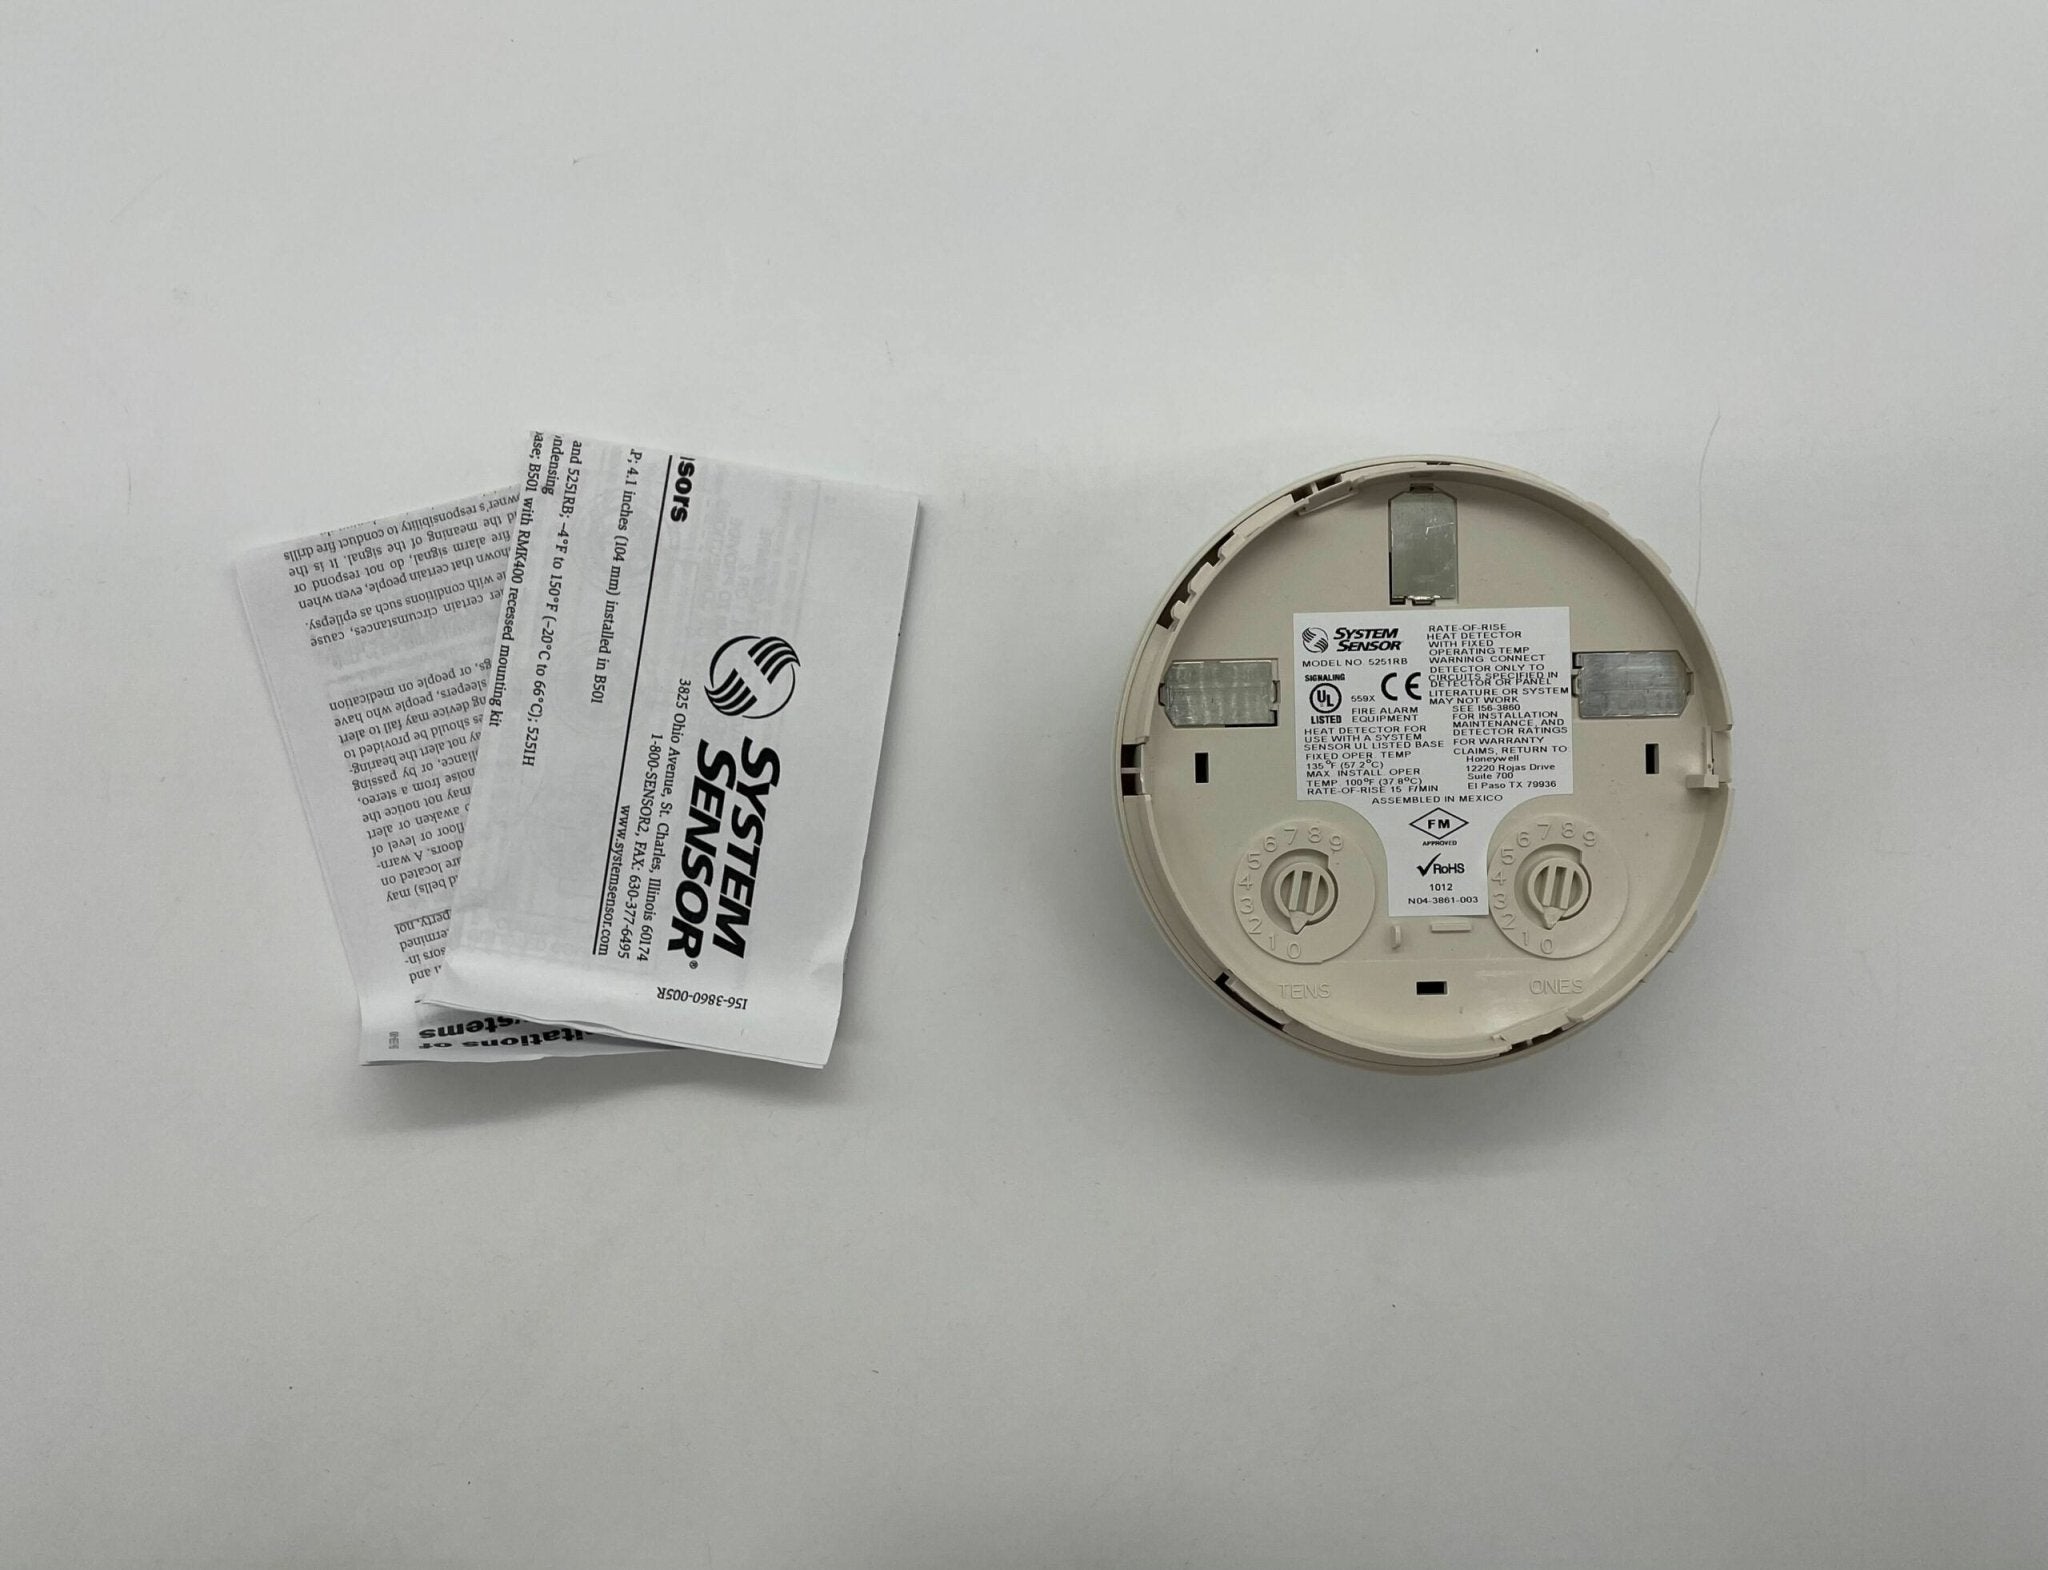 System Sensor 5251RB - The Fire Alarm Supplier